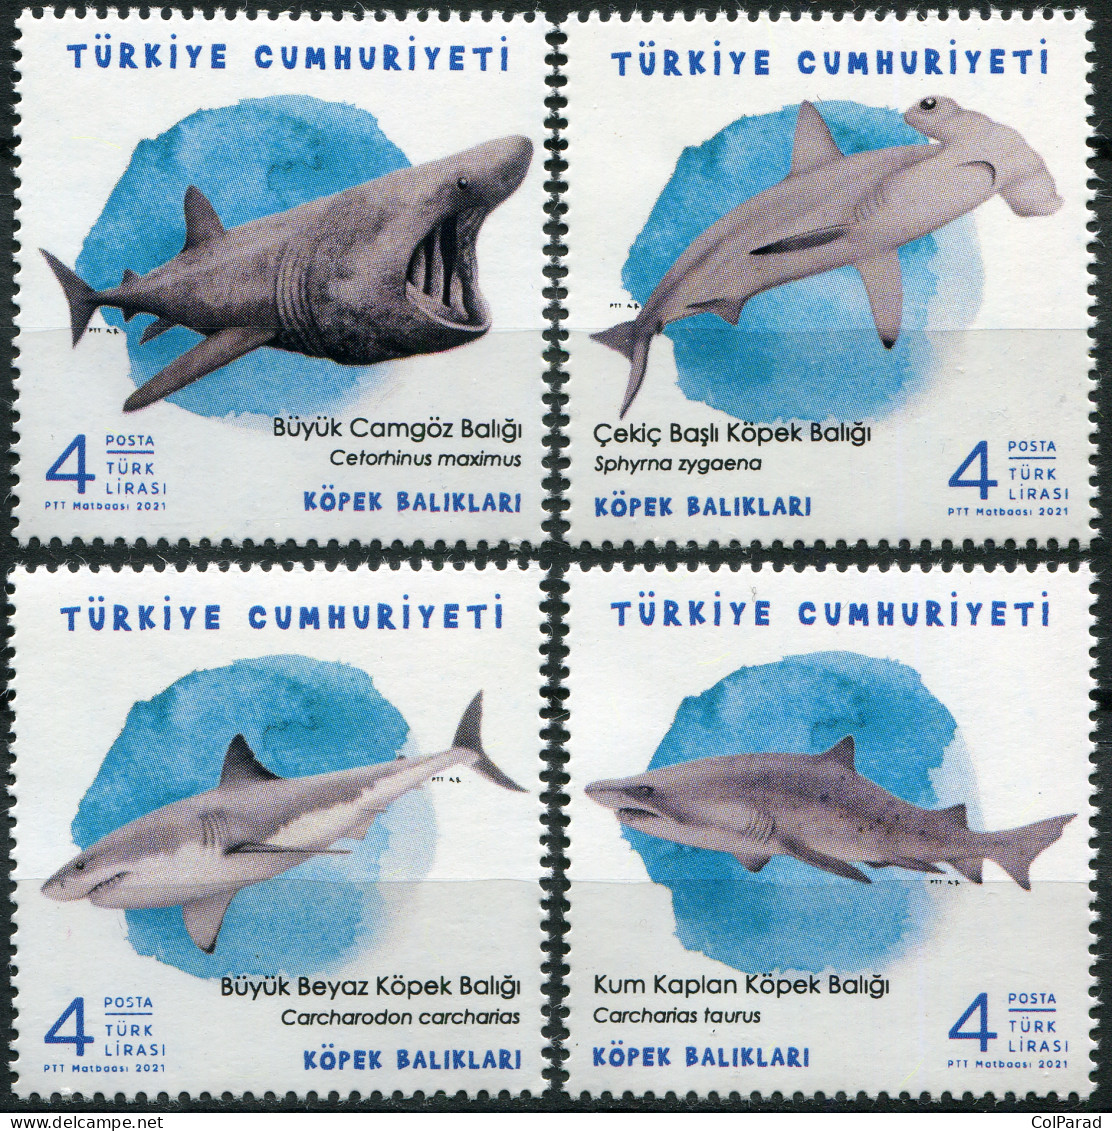 TURKEY - 2021 - SET OF 4 STAMPS MNH ** - Sharks - Nuevos